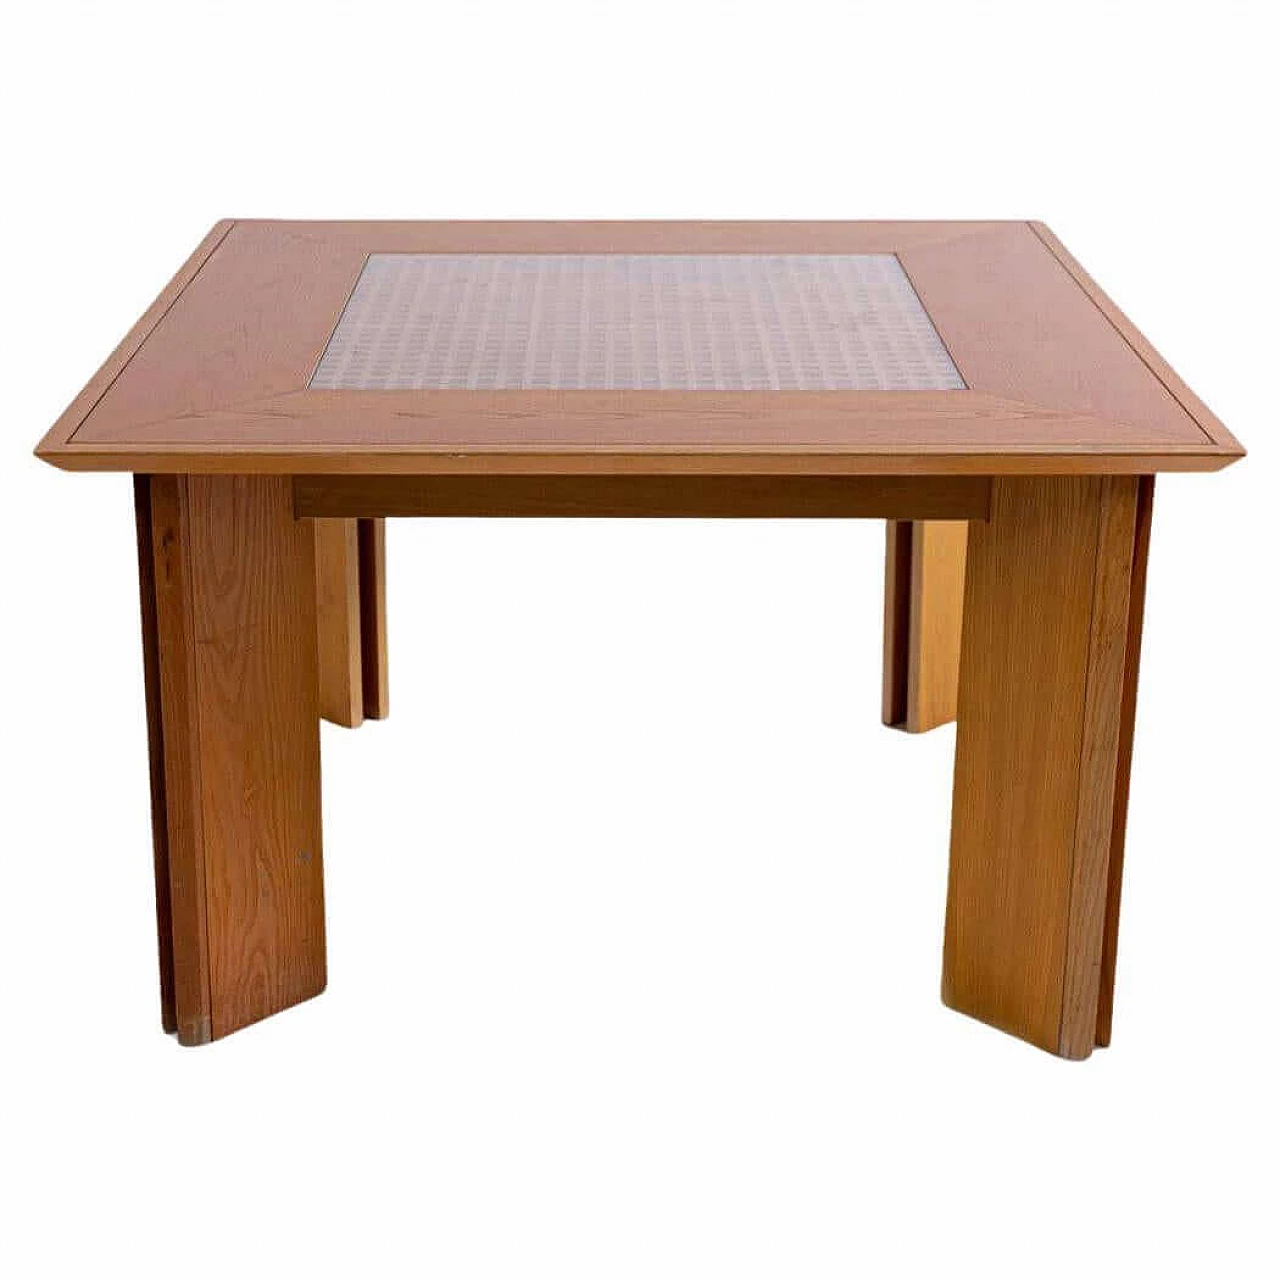 Gigi Sabadin wooden table with central grid decoration, 1960s 1399428